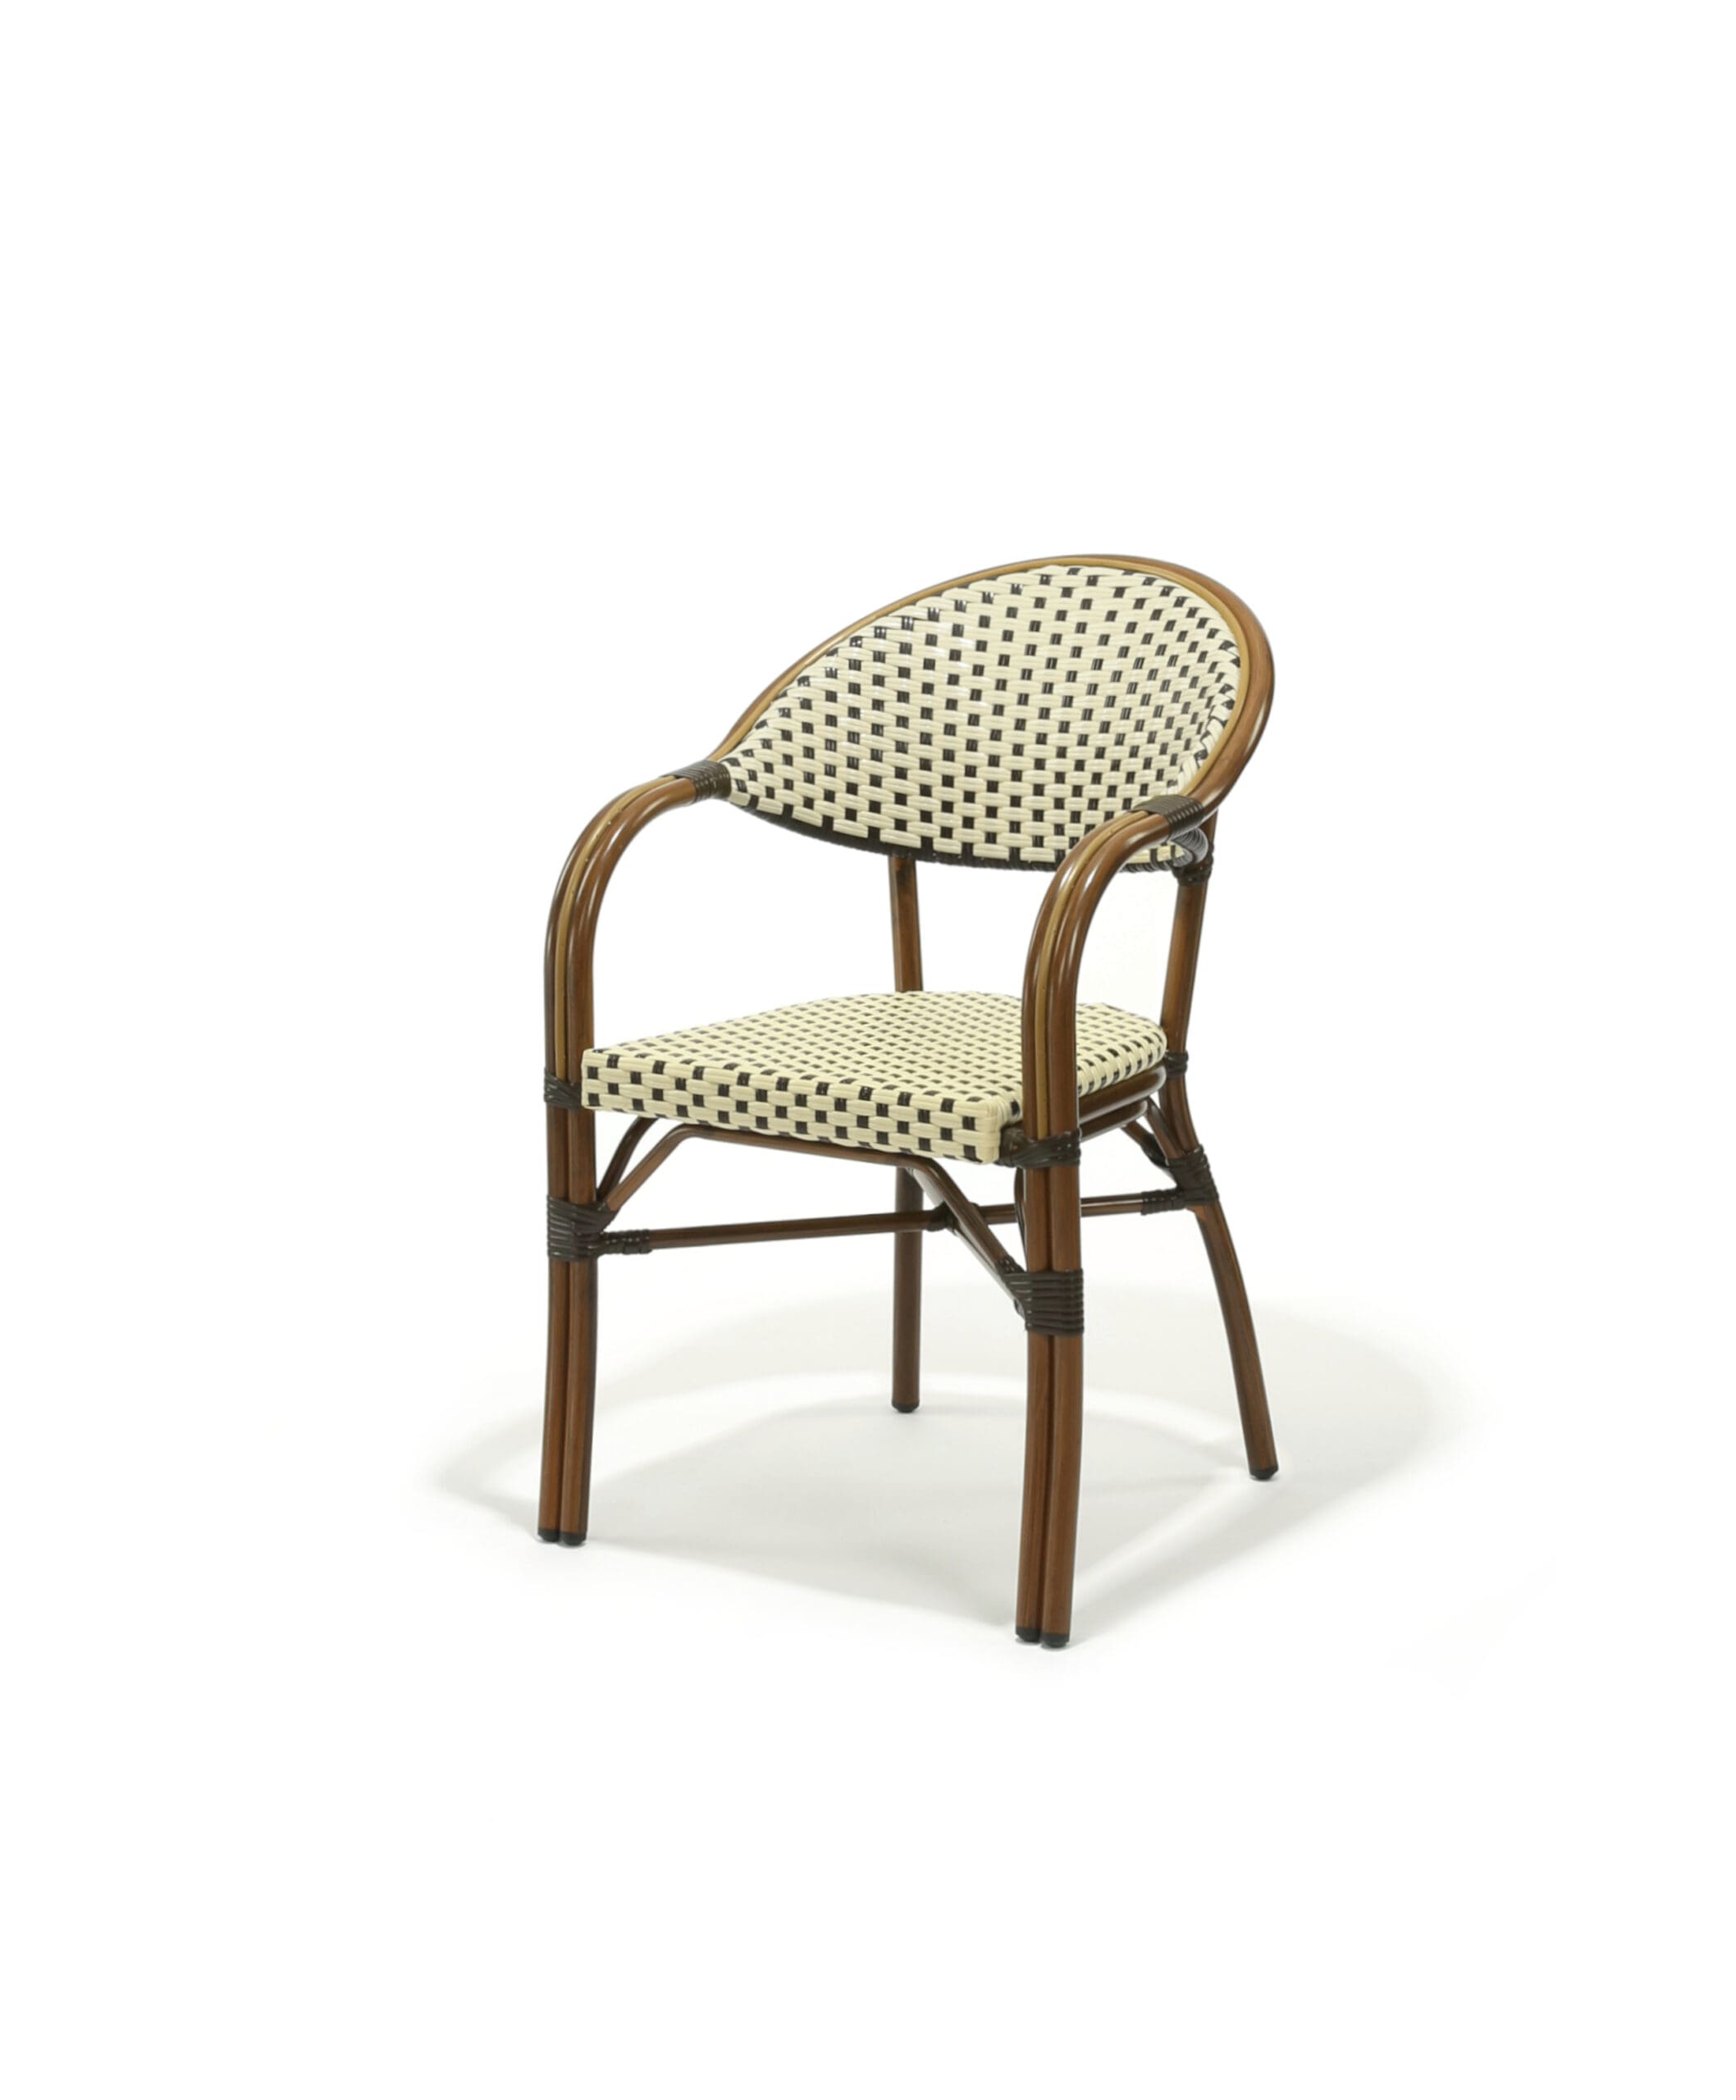 DesignForm Furnishings: Outdoor Chairs & Stools | LA Restaurants